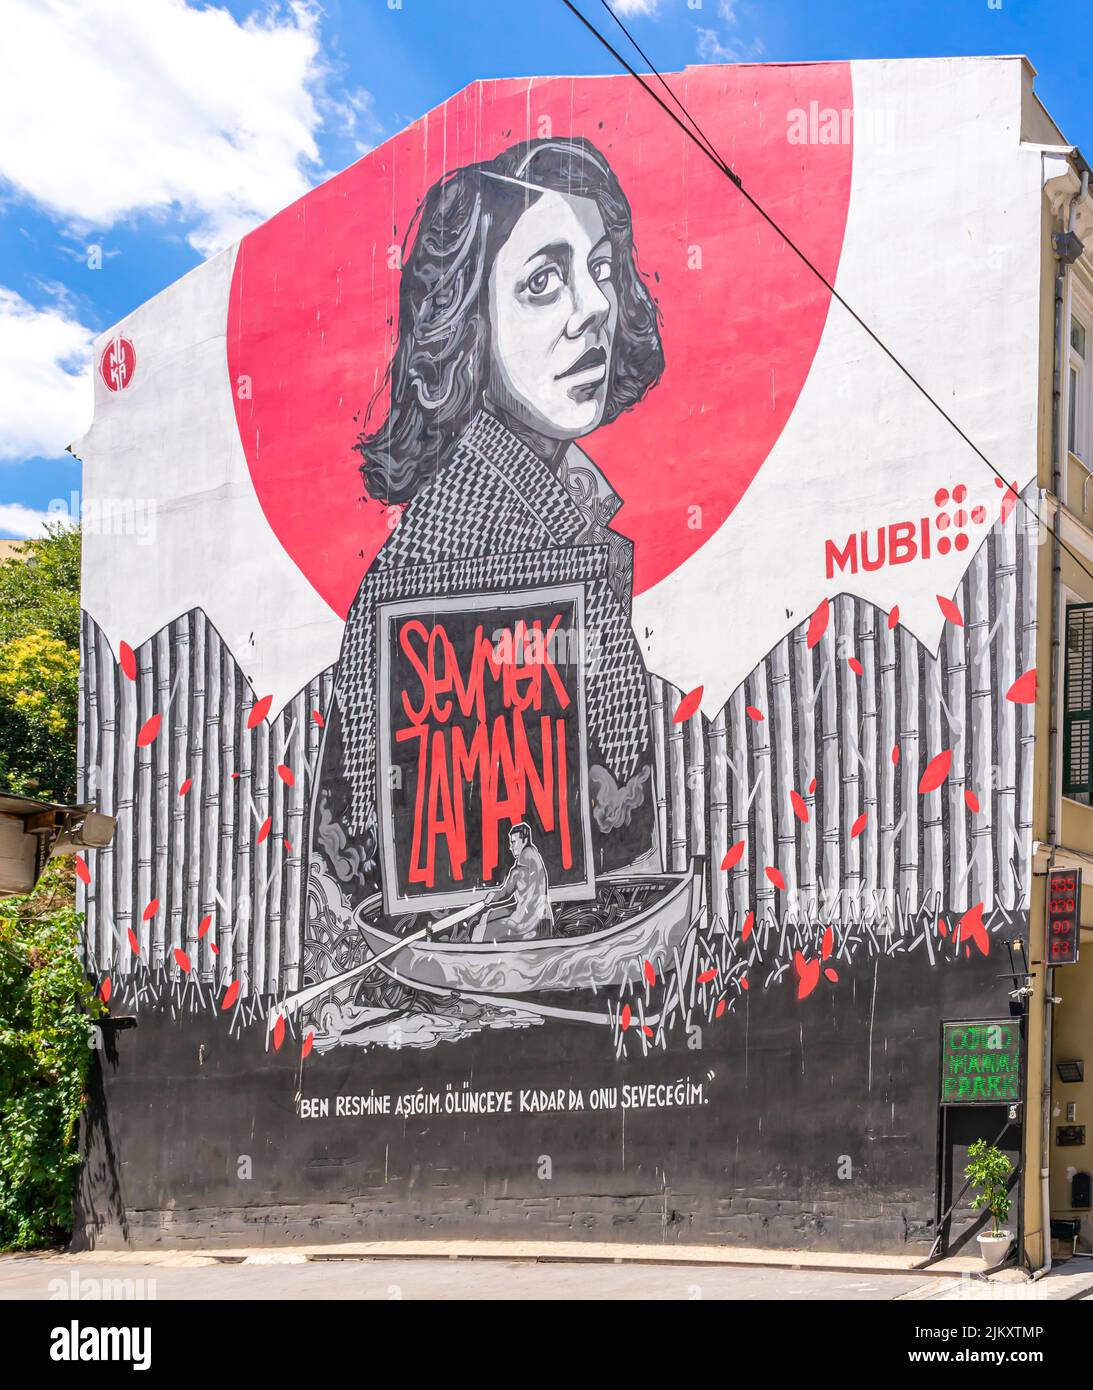 Mural by Turkish artist Furkan 'Nuka' Birgün, MUBI project, dedicated to film Sevmek Zamani, or Time to Love, Kadikoy, Istanbul, Turkey Stock Photo